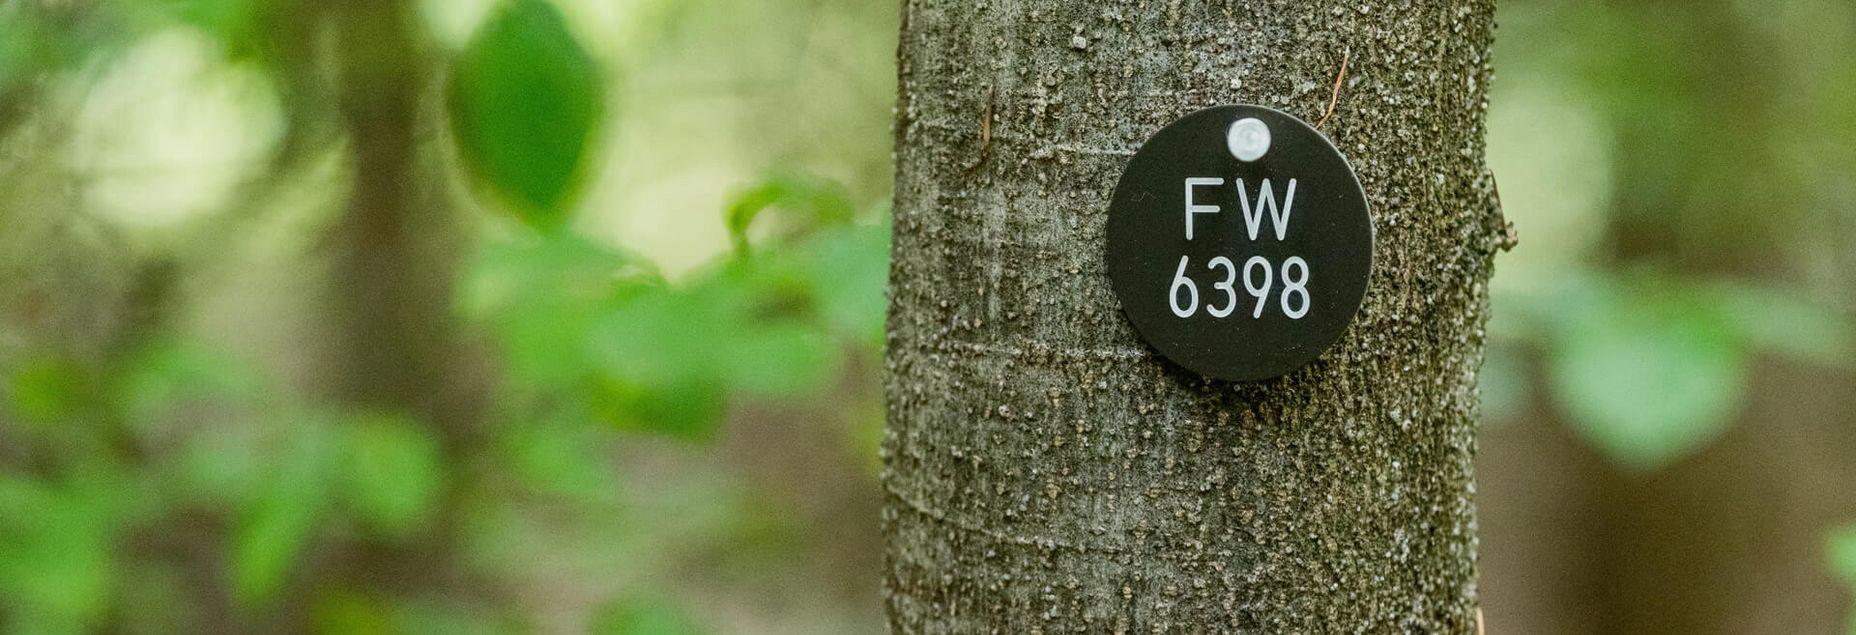 Baum FW 6398 - Plakette